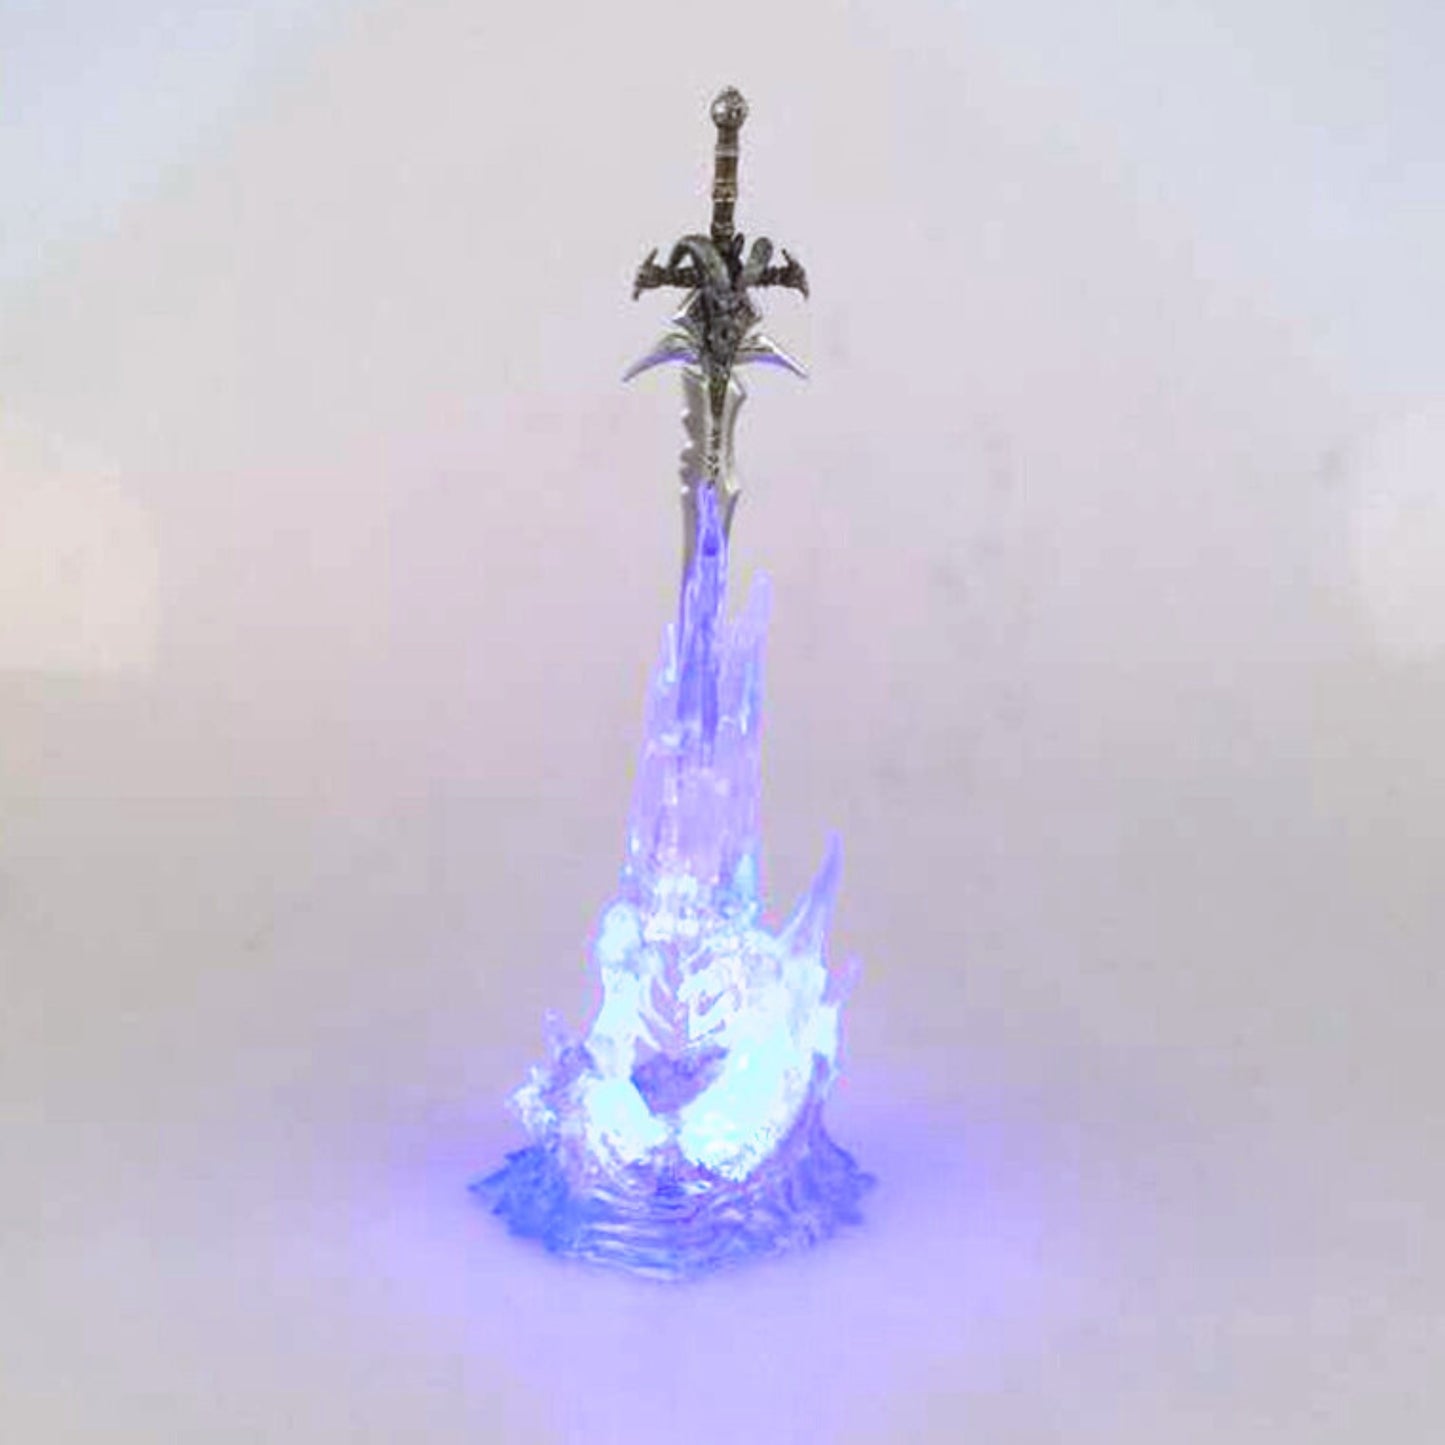 World of Warcraft Metal Arthas Menethil Sword Frostmourne with LED Lighting